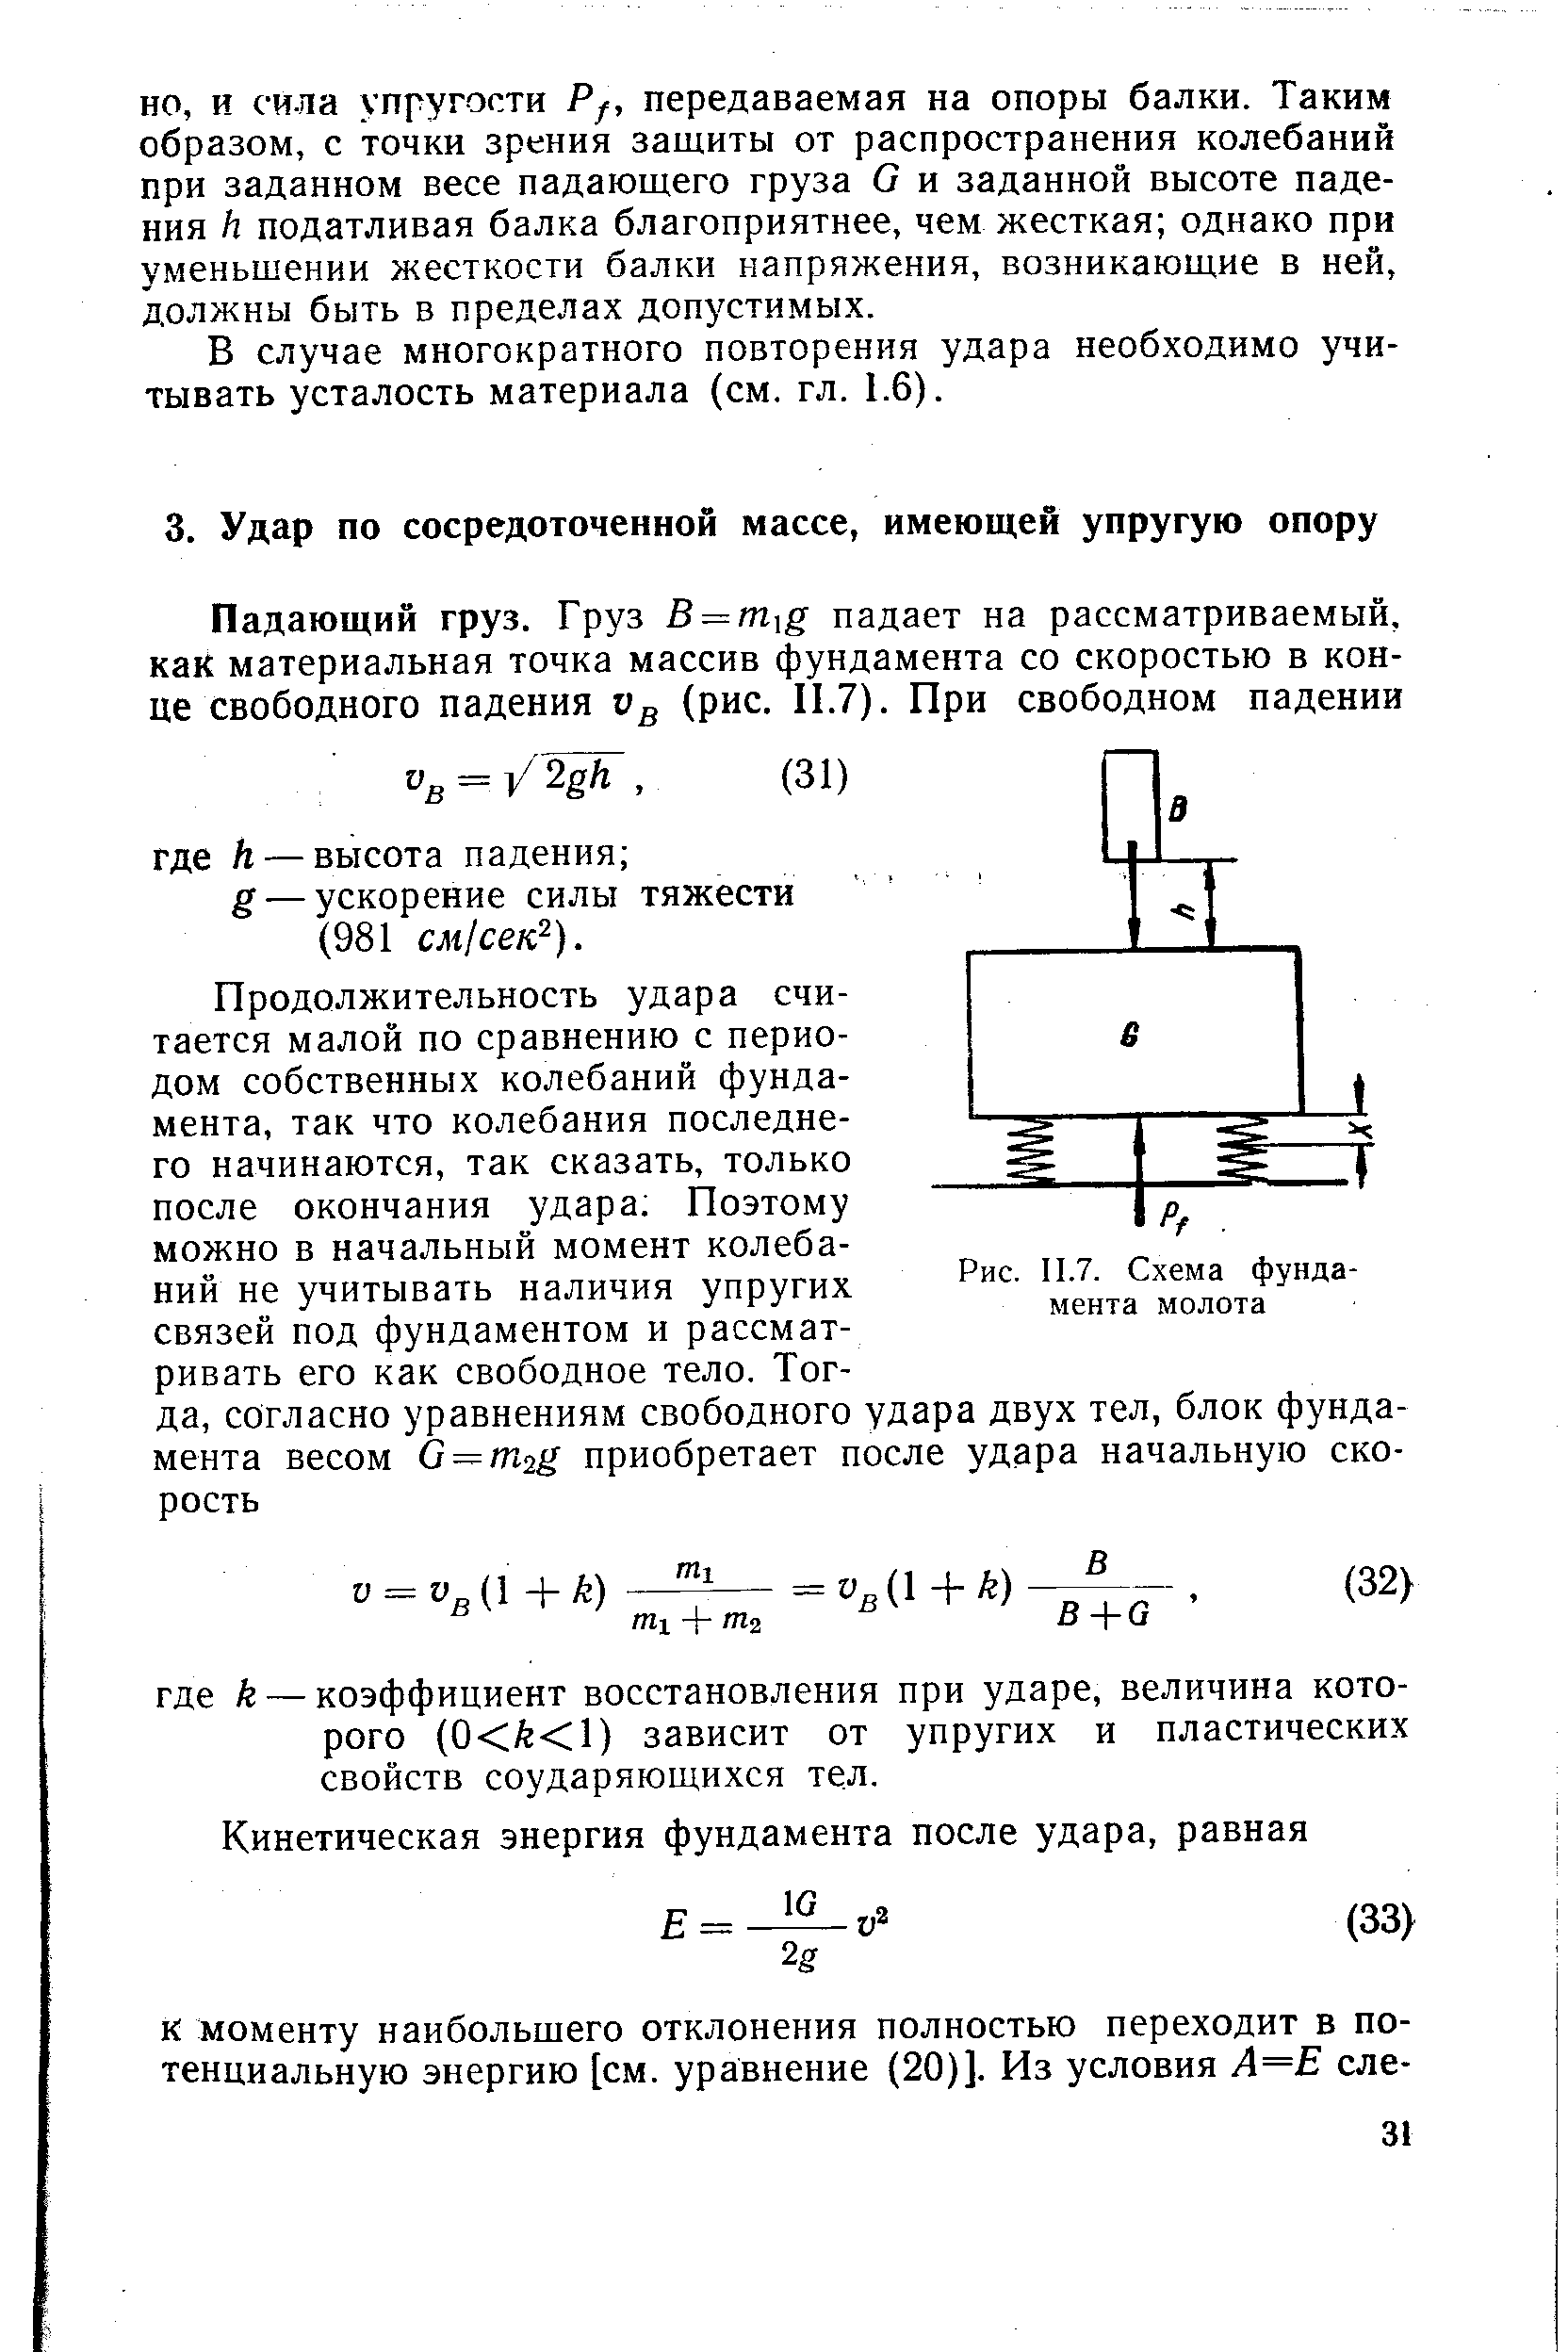 Рис. П.7. Схема фундамента молота
